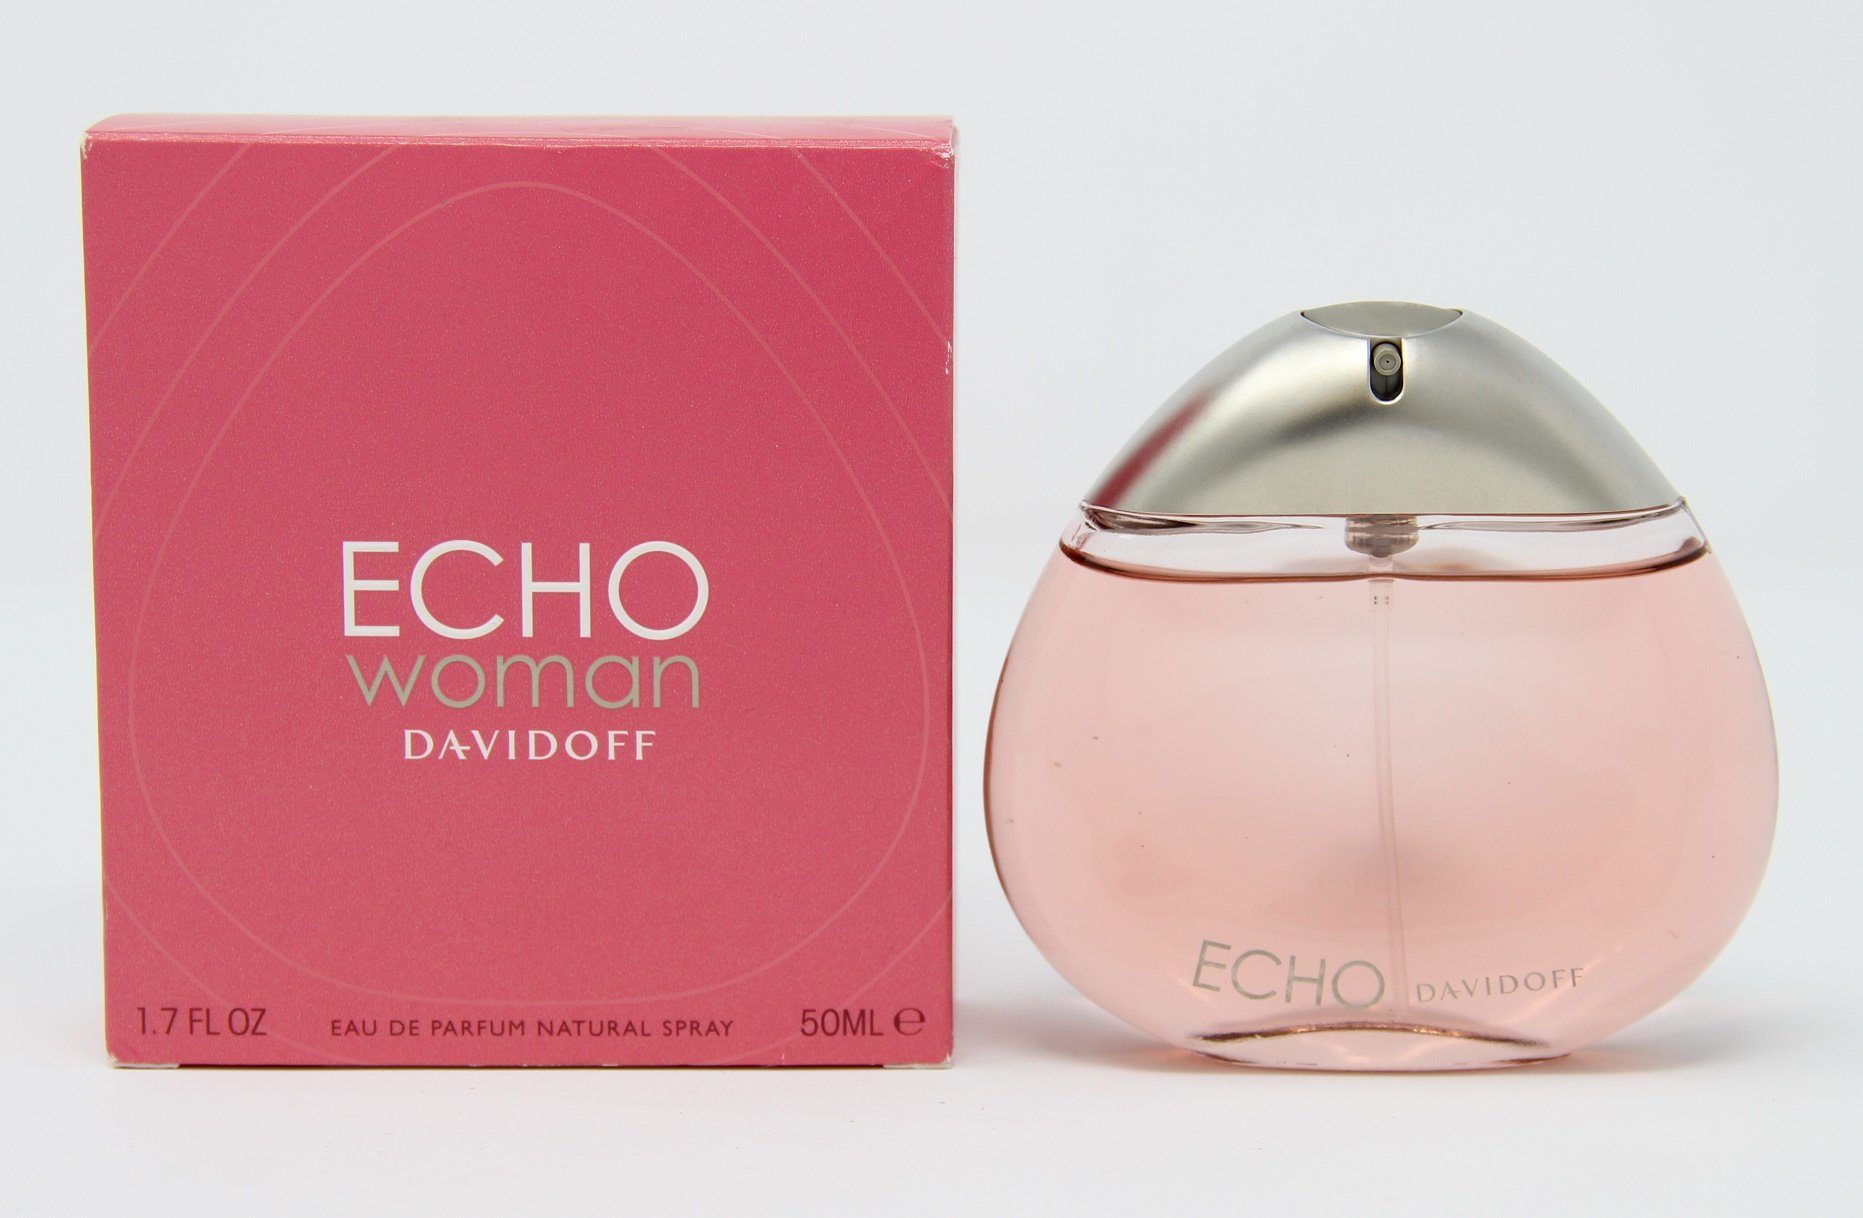 DAVIDOFF Eau de Parfum Davidoff Echo Woman Eau de Parfum Spray 50ml